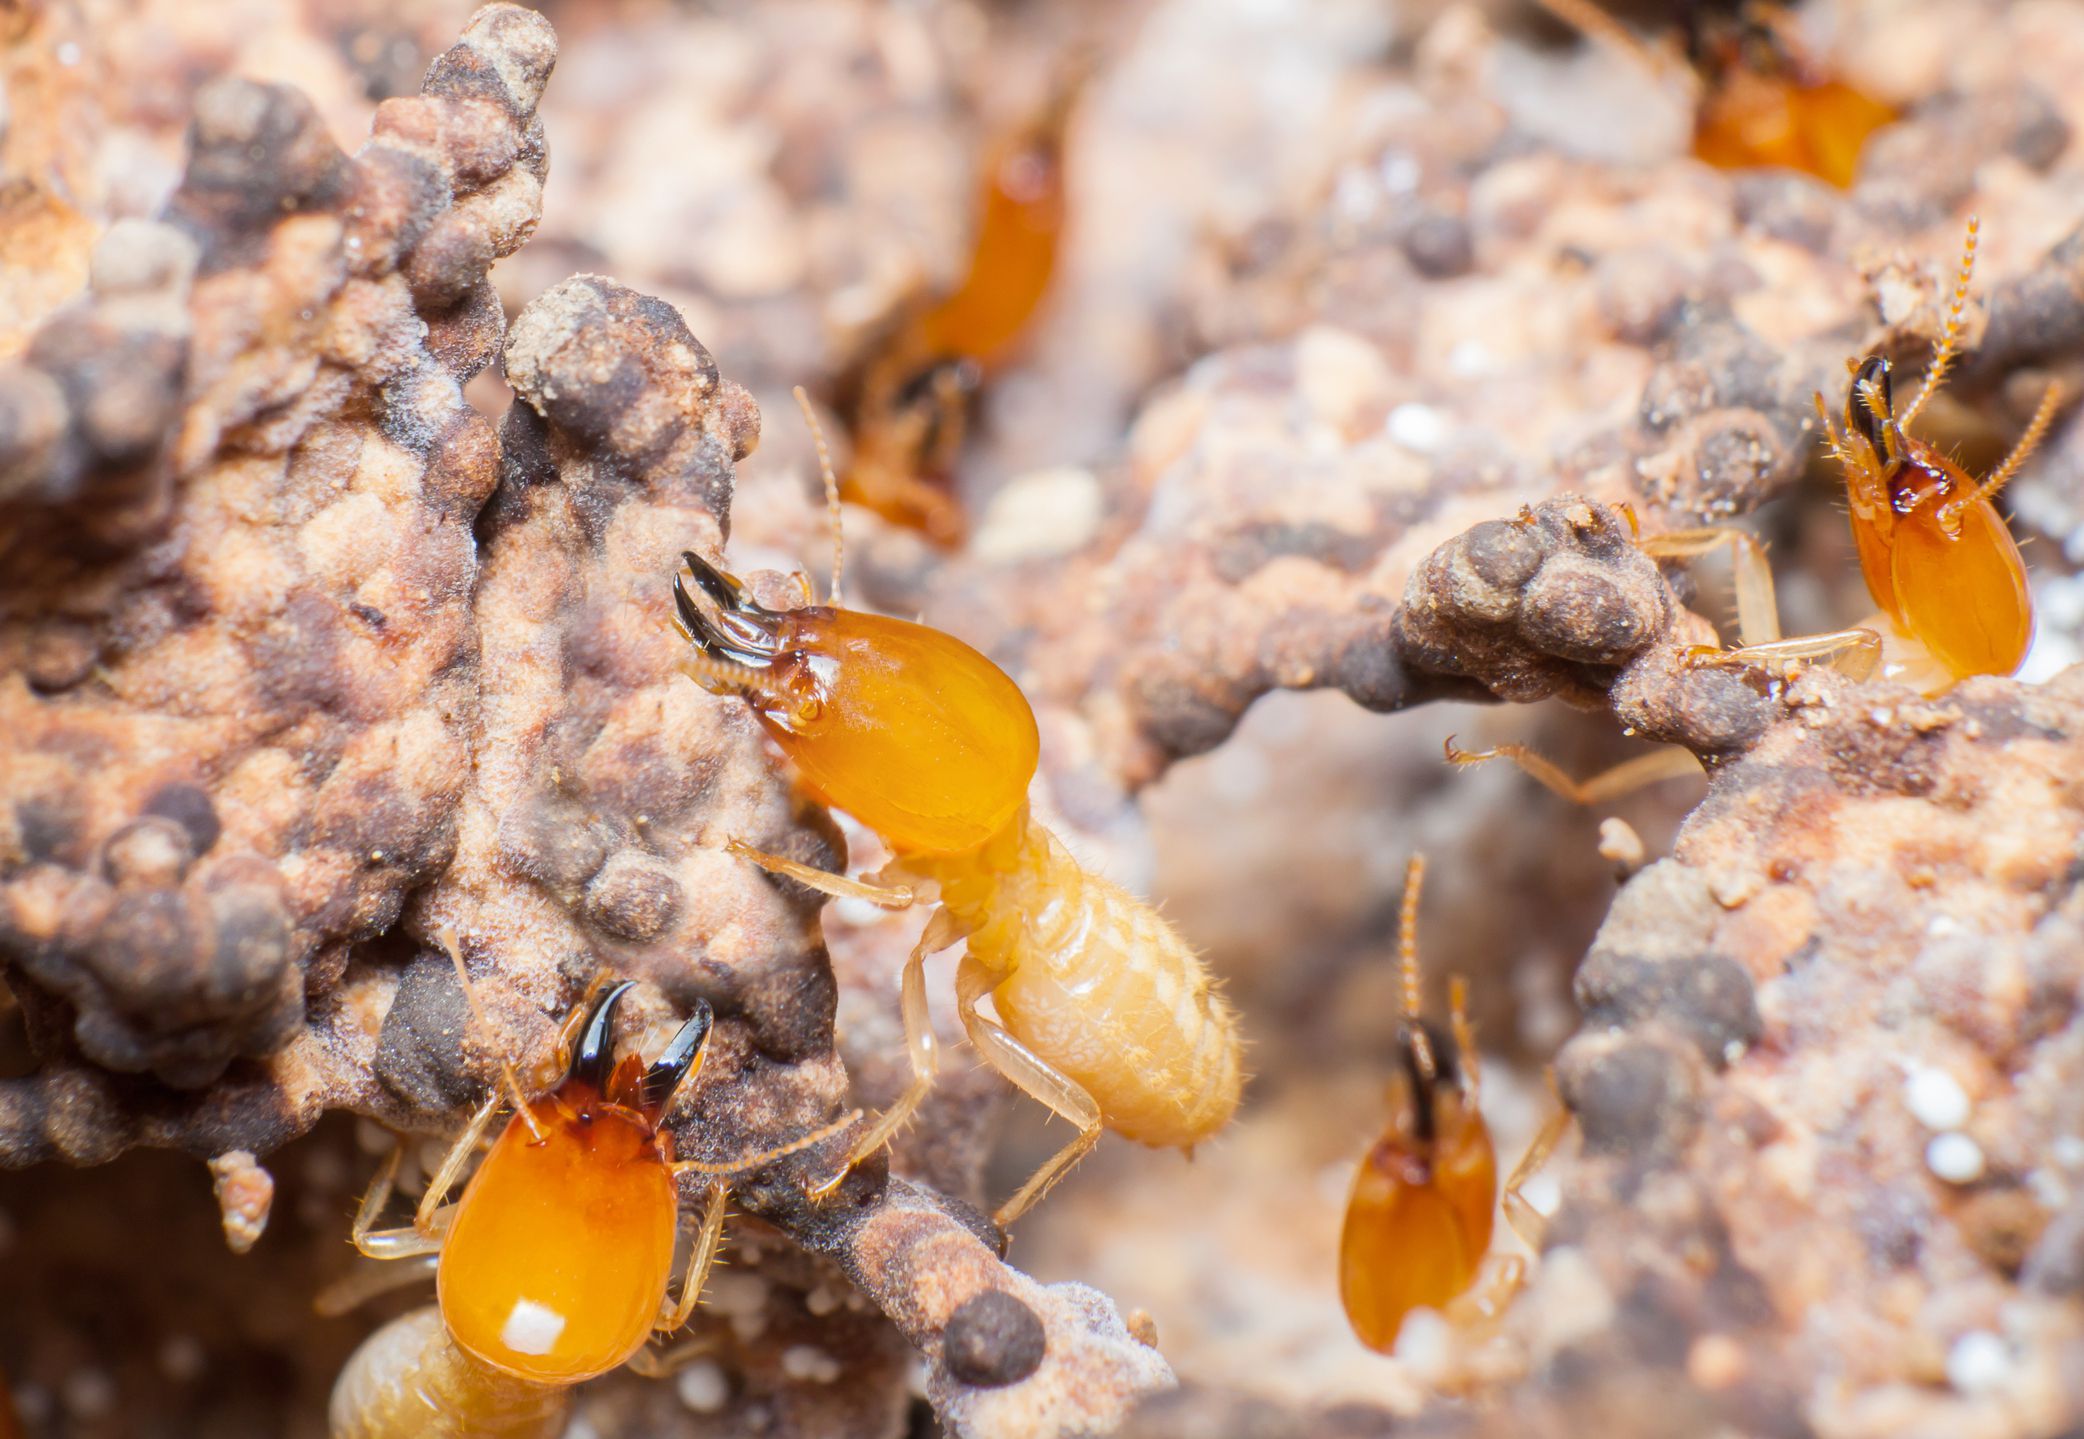 Does Using Mulch Near a House Foundation Draw Termites?